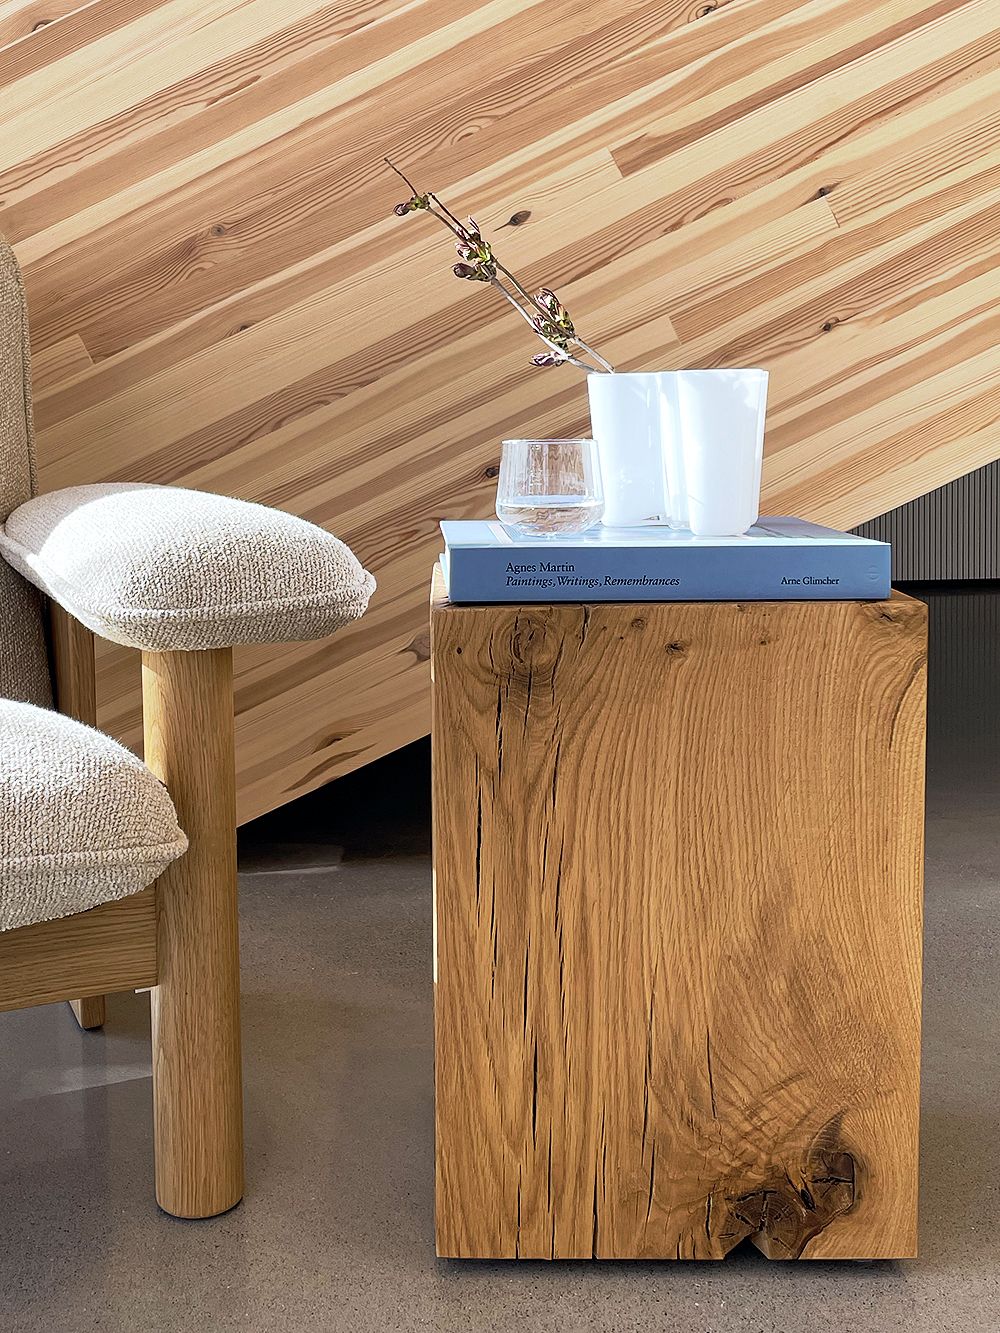 Nikari Biennale stool used as a side table next to Menu's Brasilia lounge chair